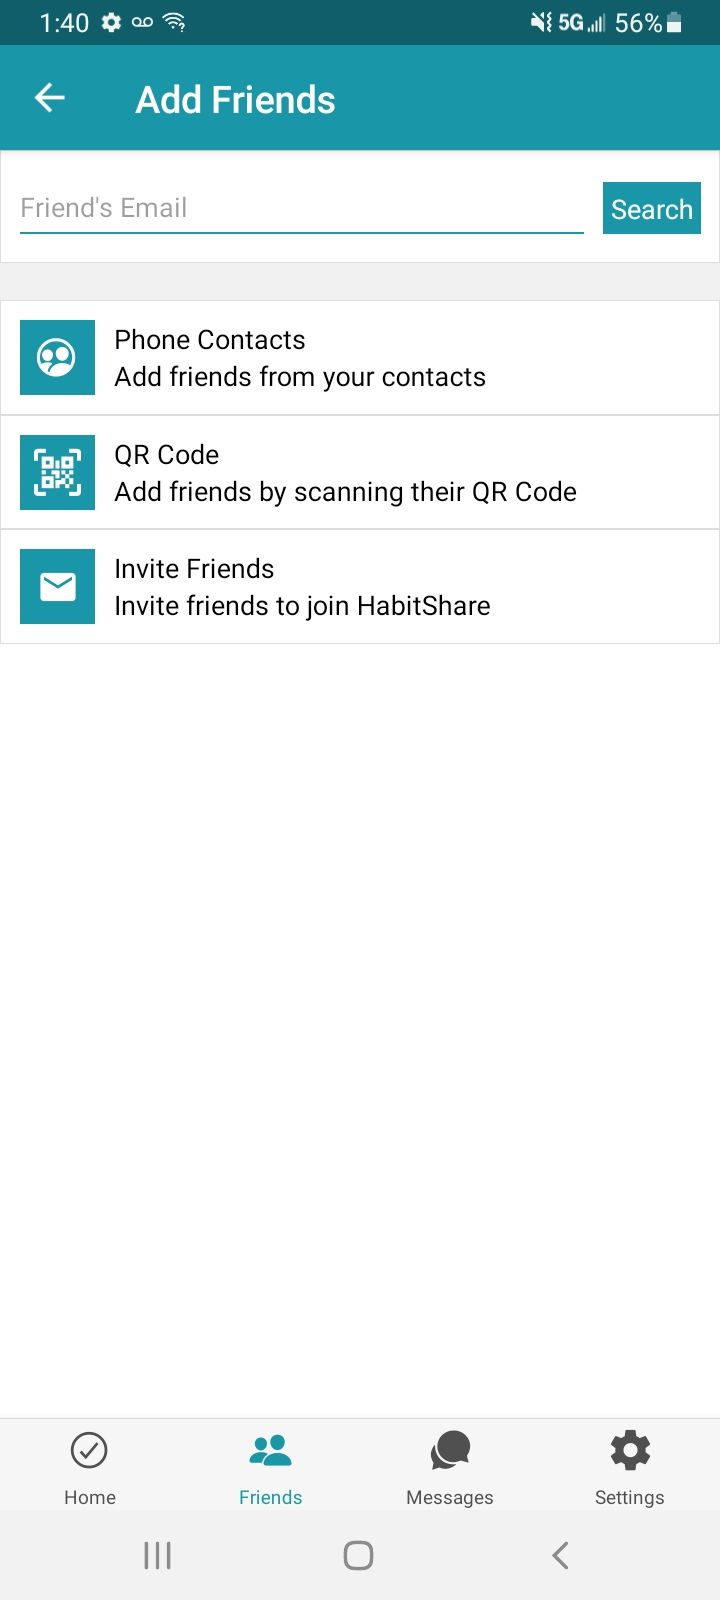 Adding friends on HabitShare.